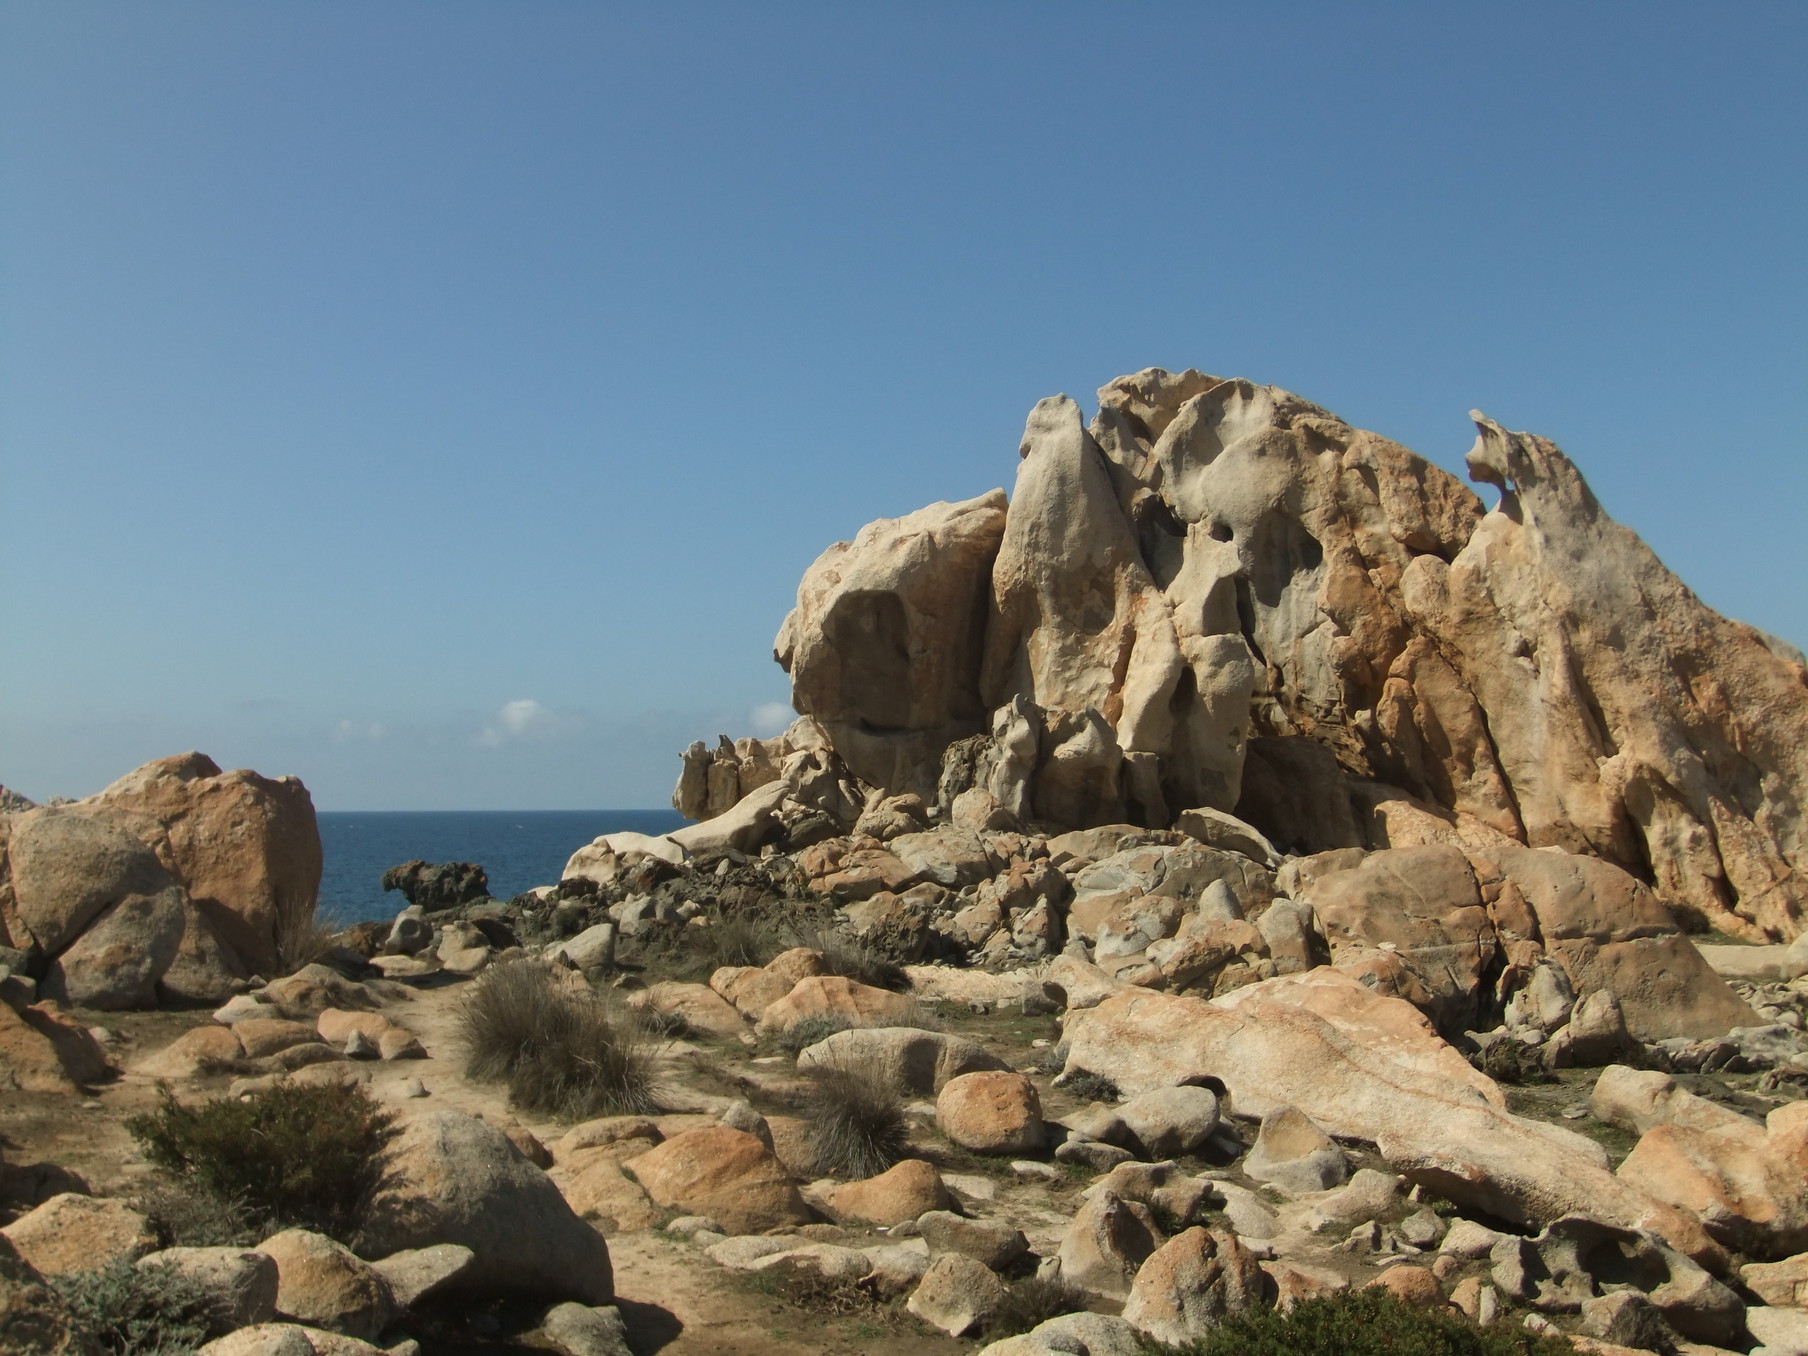 Granites at the coast